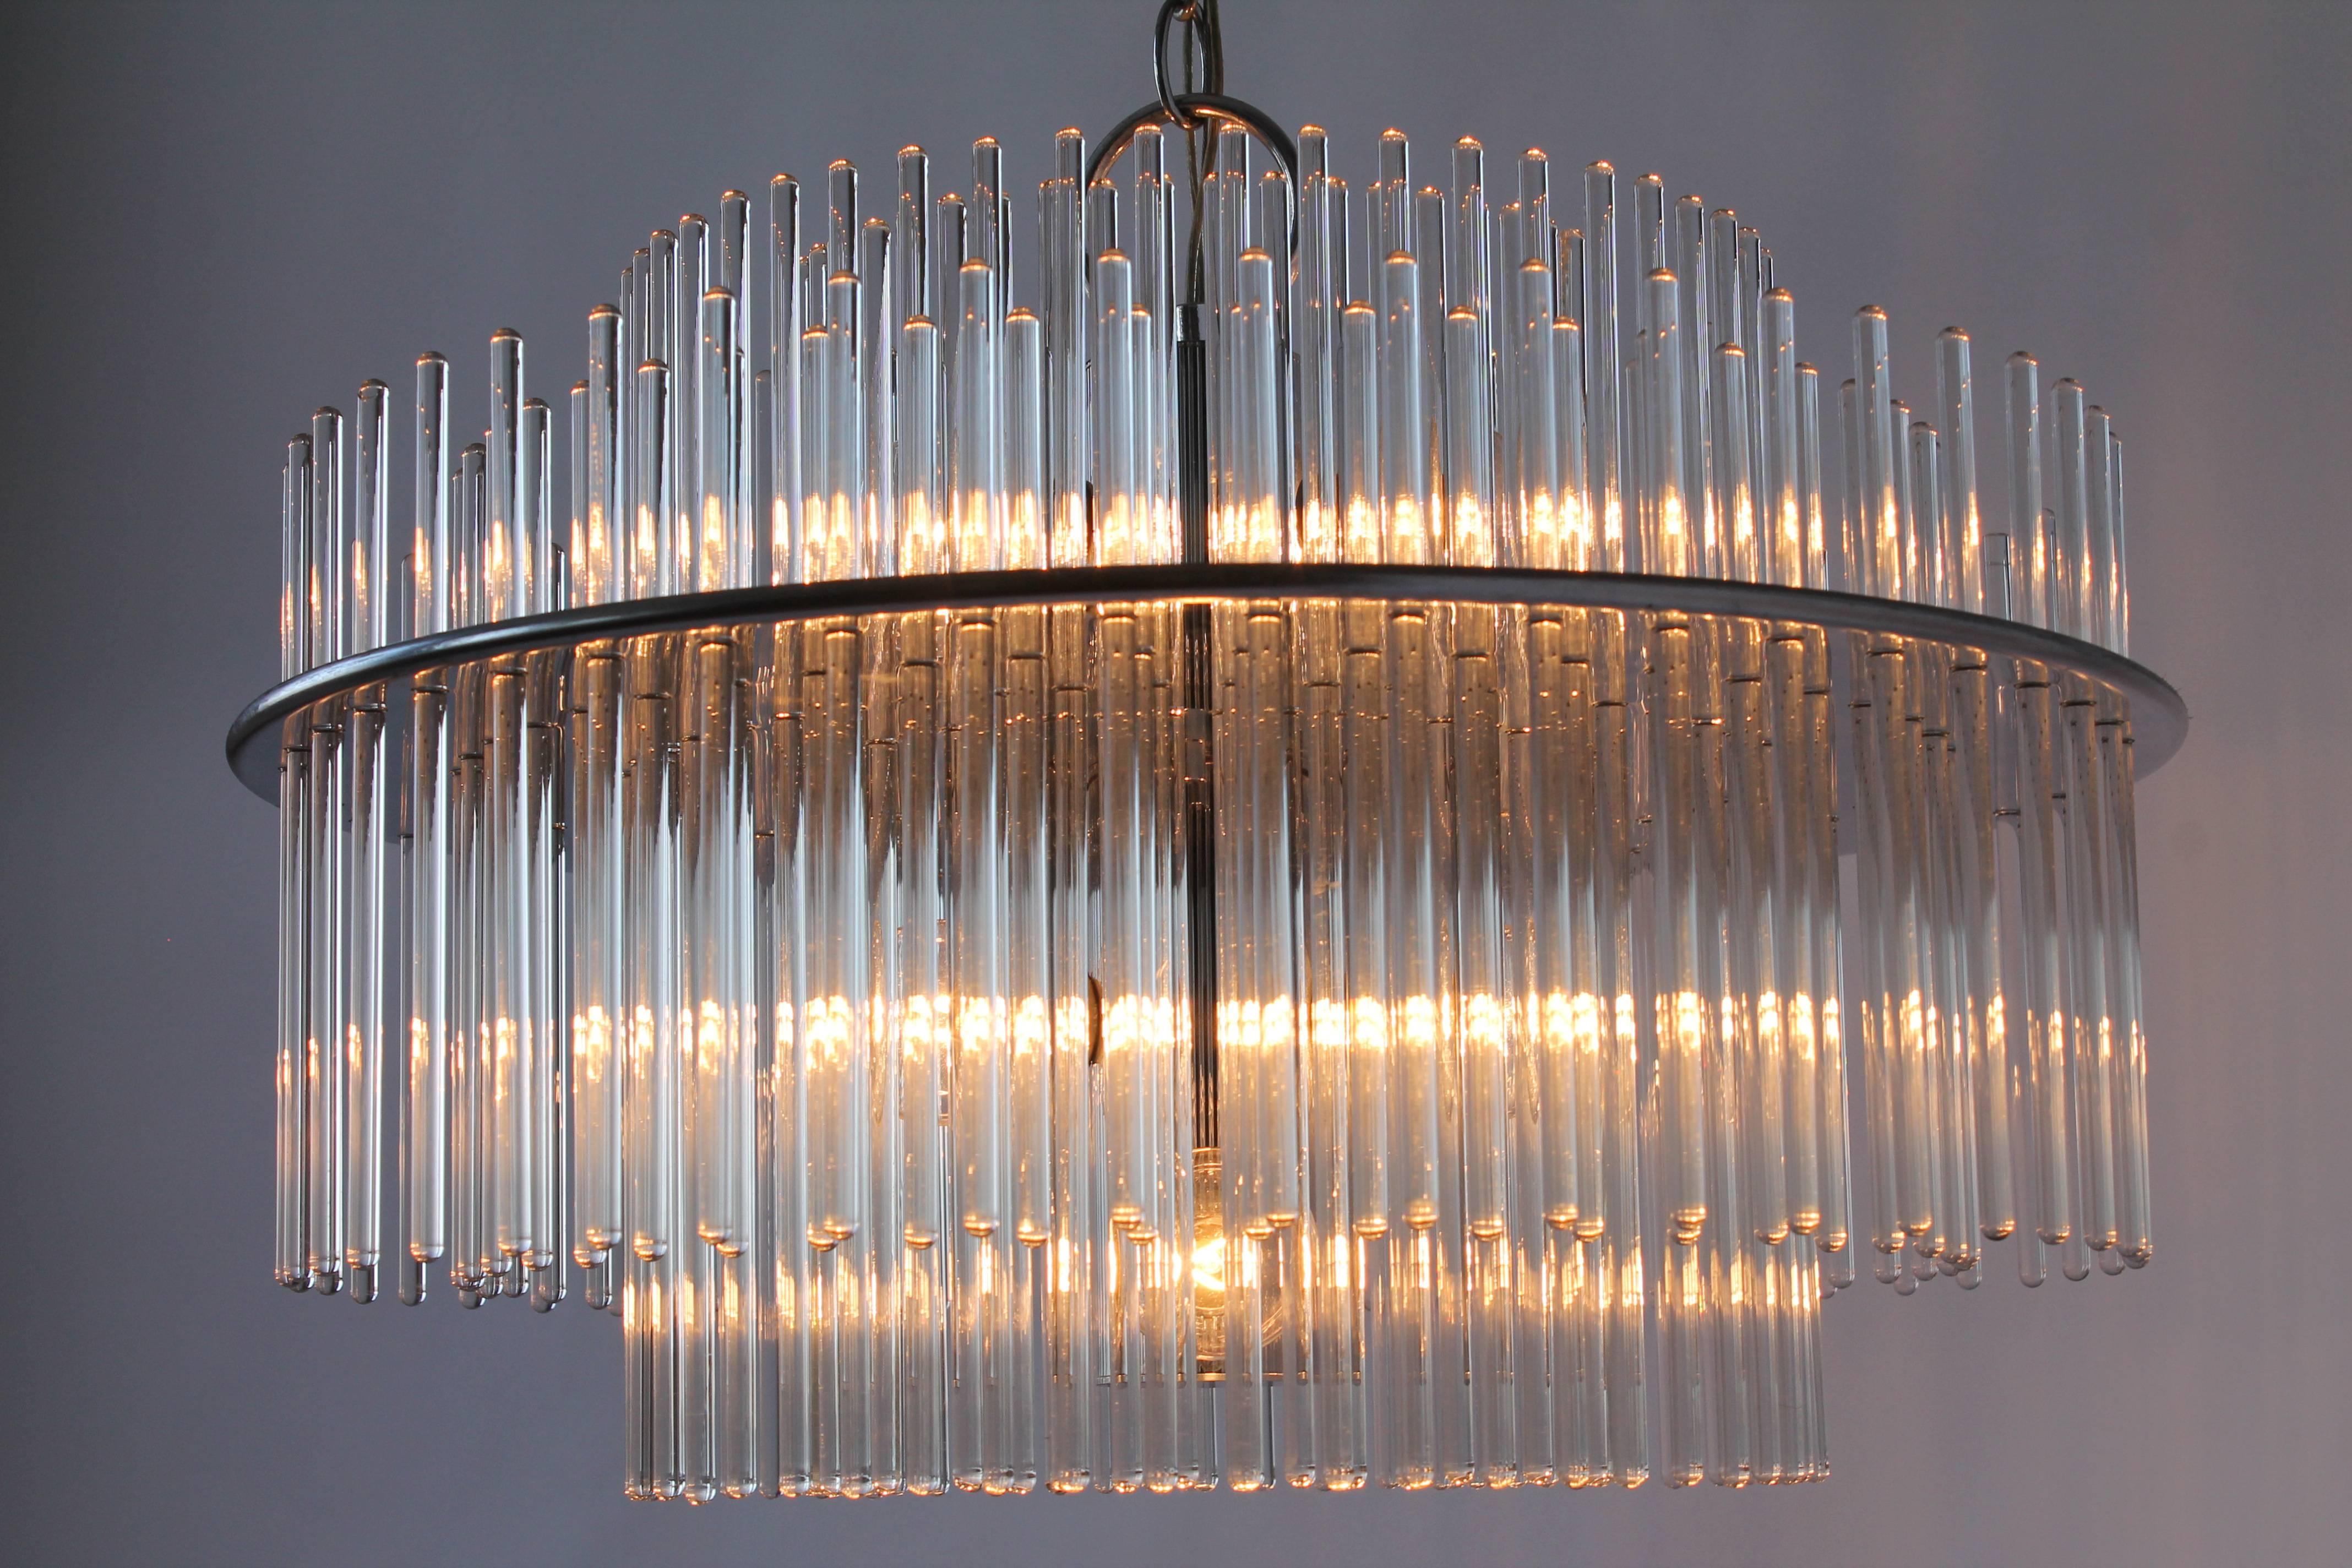 lightolier glass rod chandelier